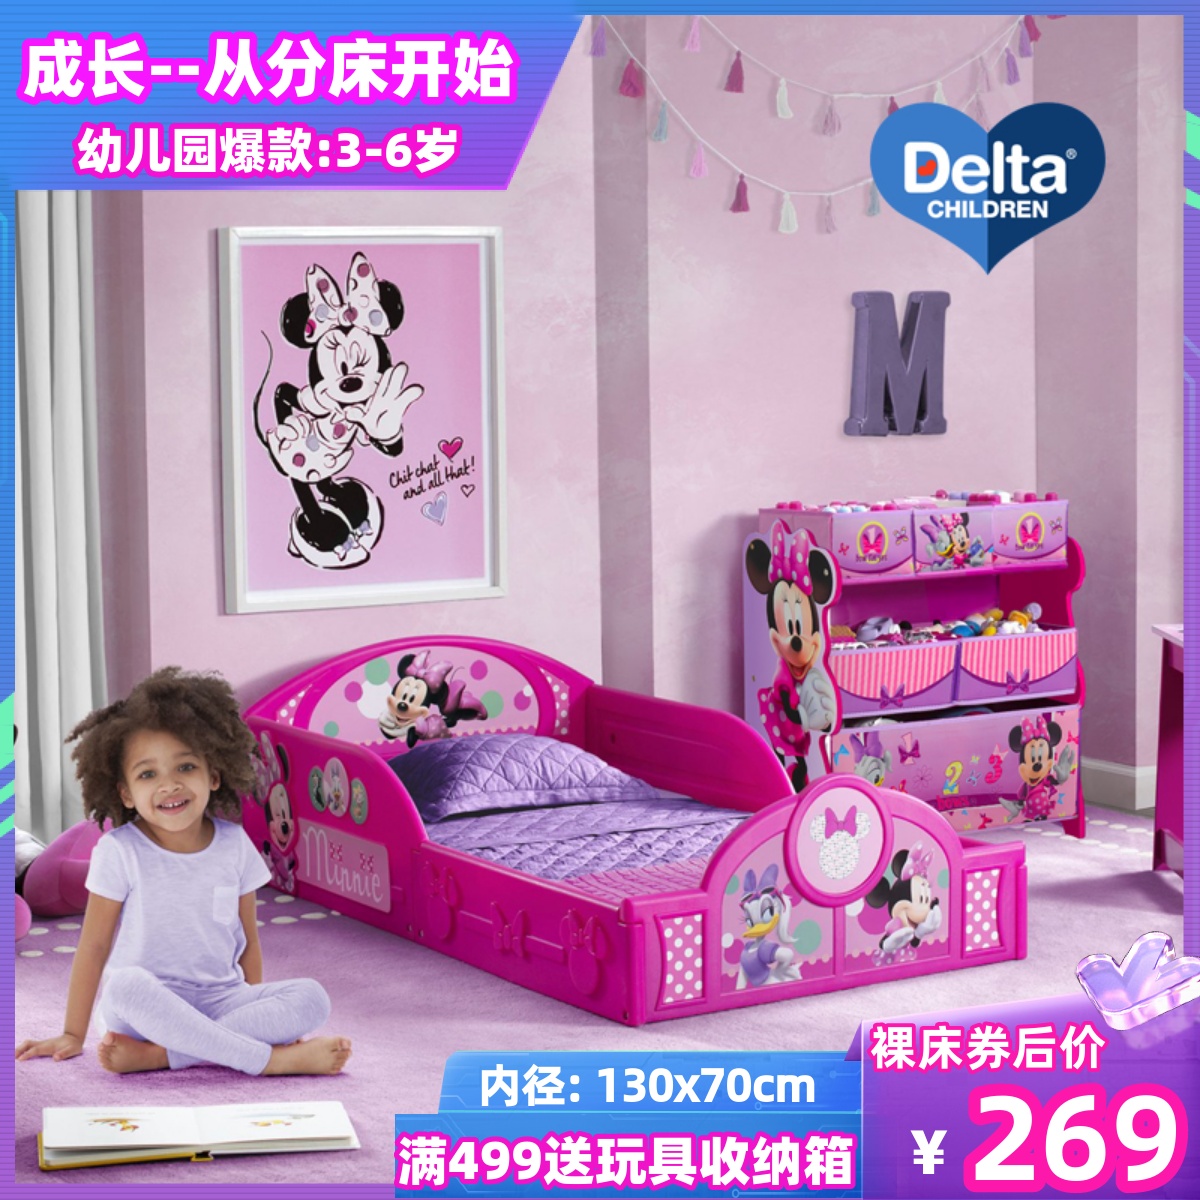 Delta Disney Authorized Children's Bed